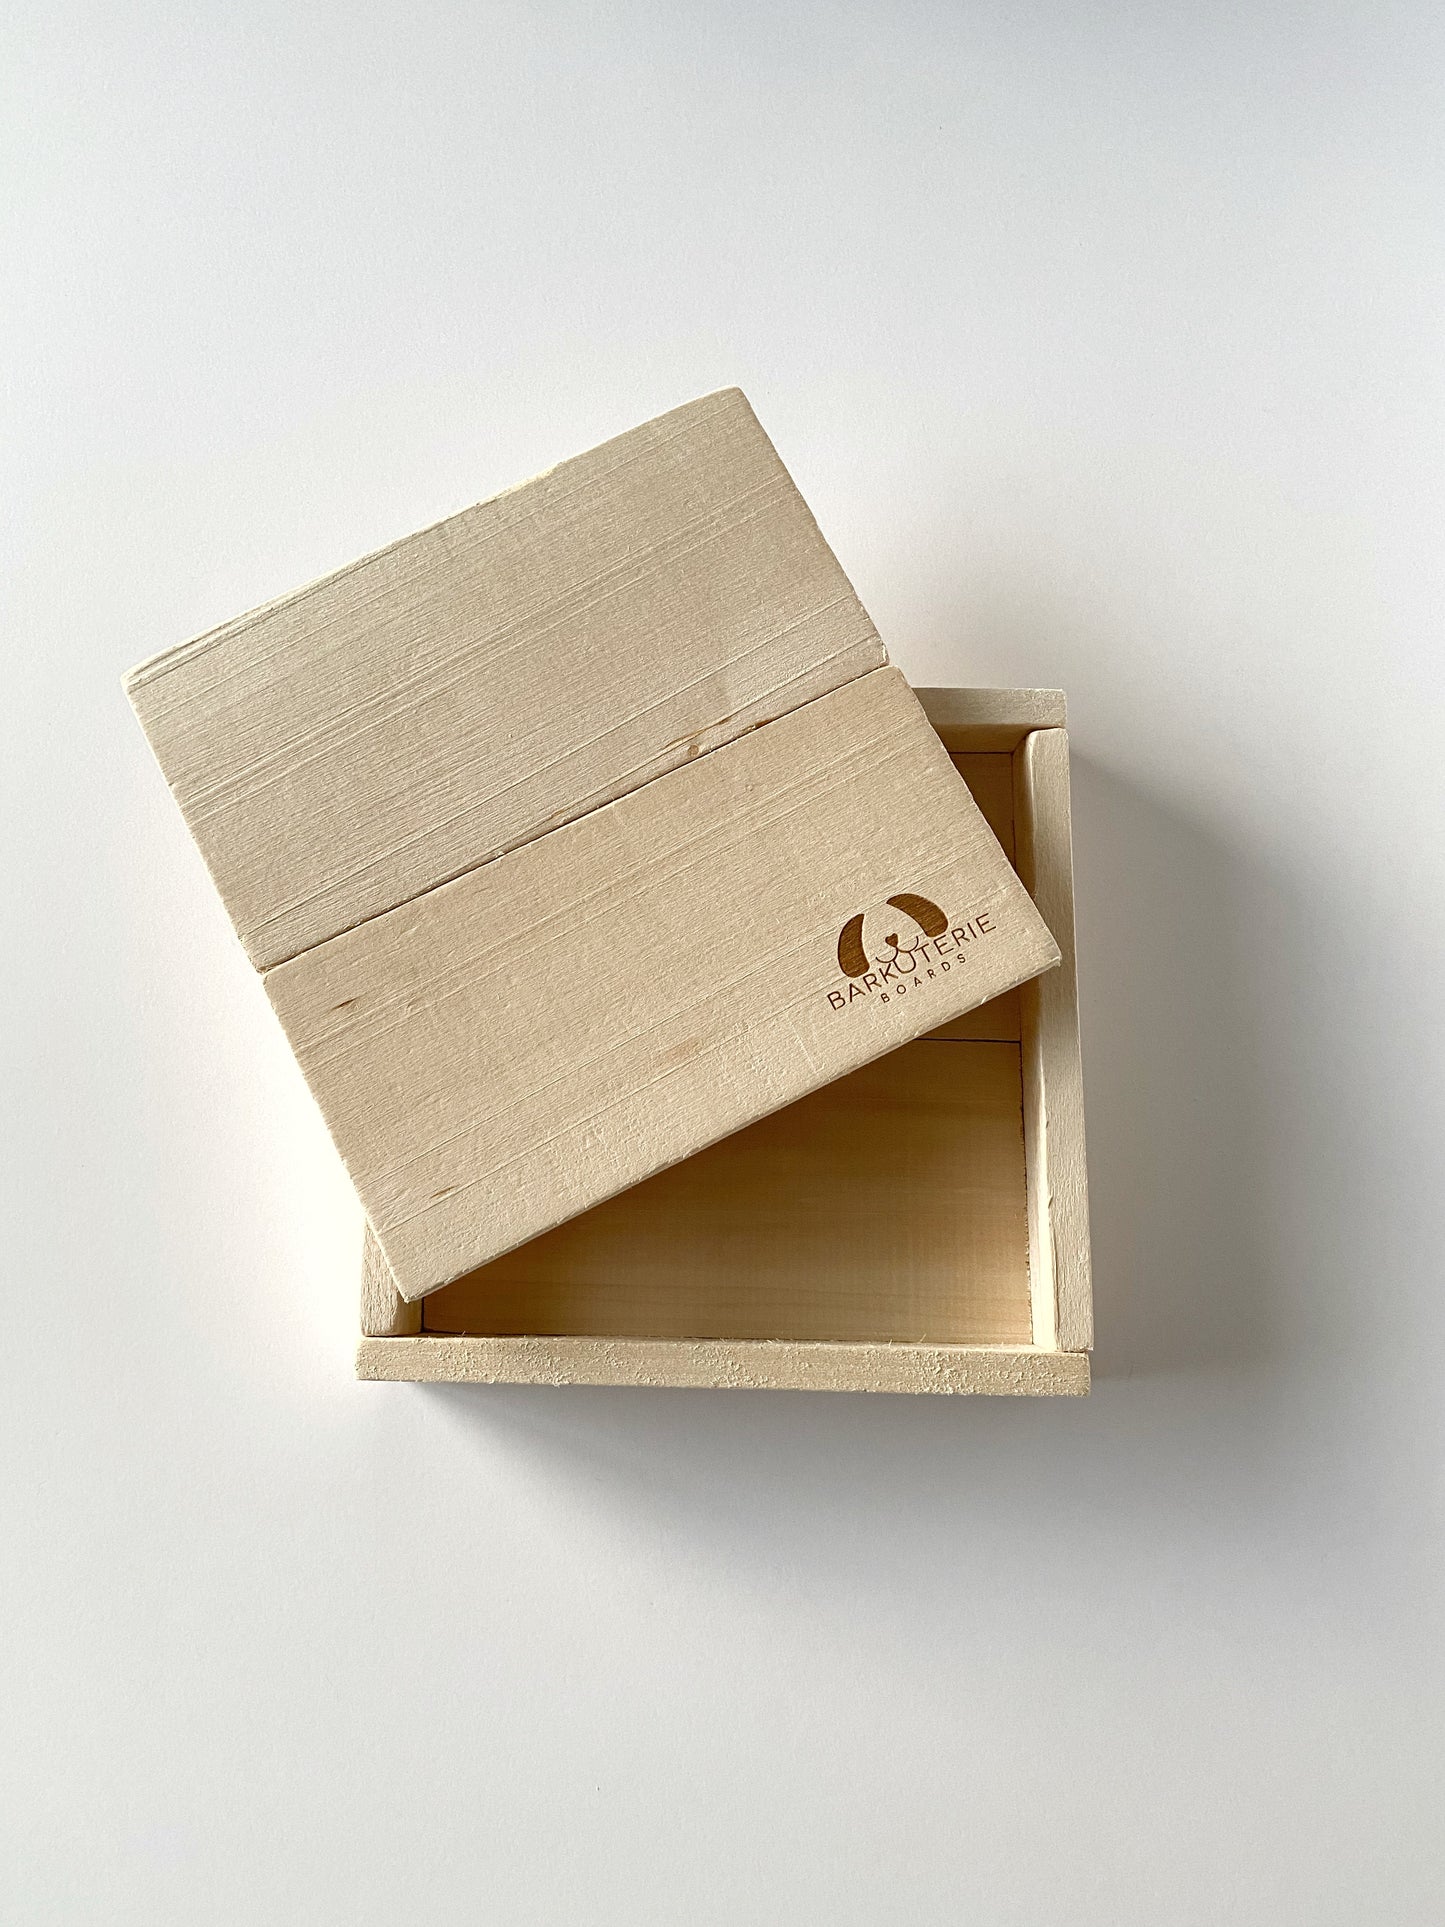 8 inch basswood custom keepsake box